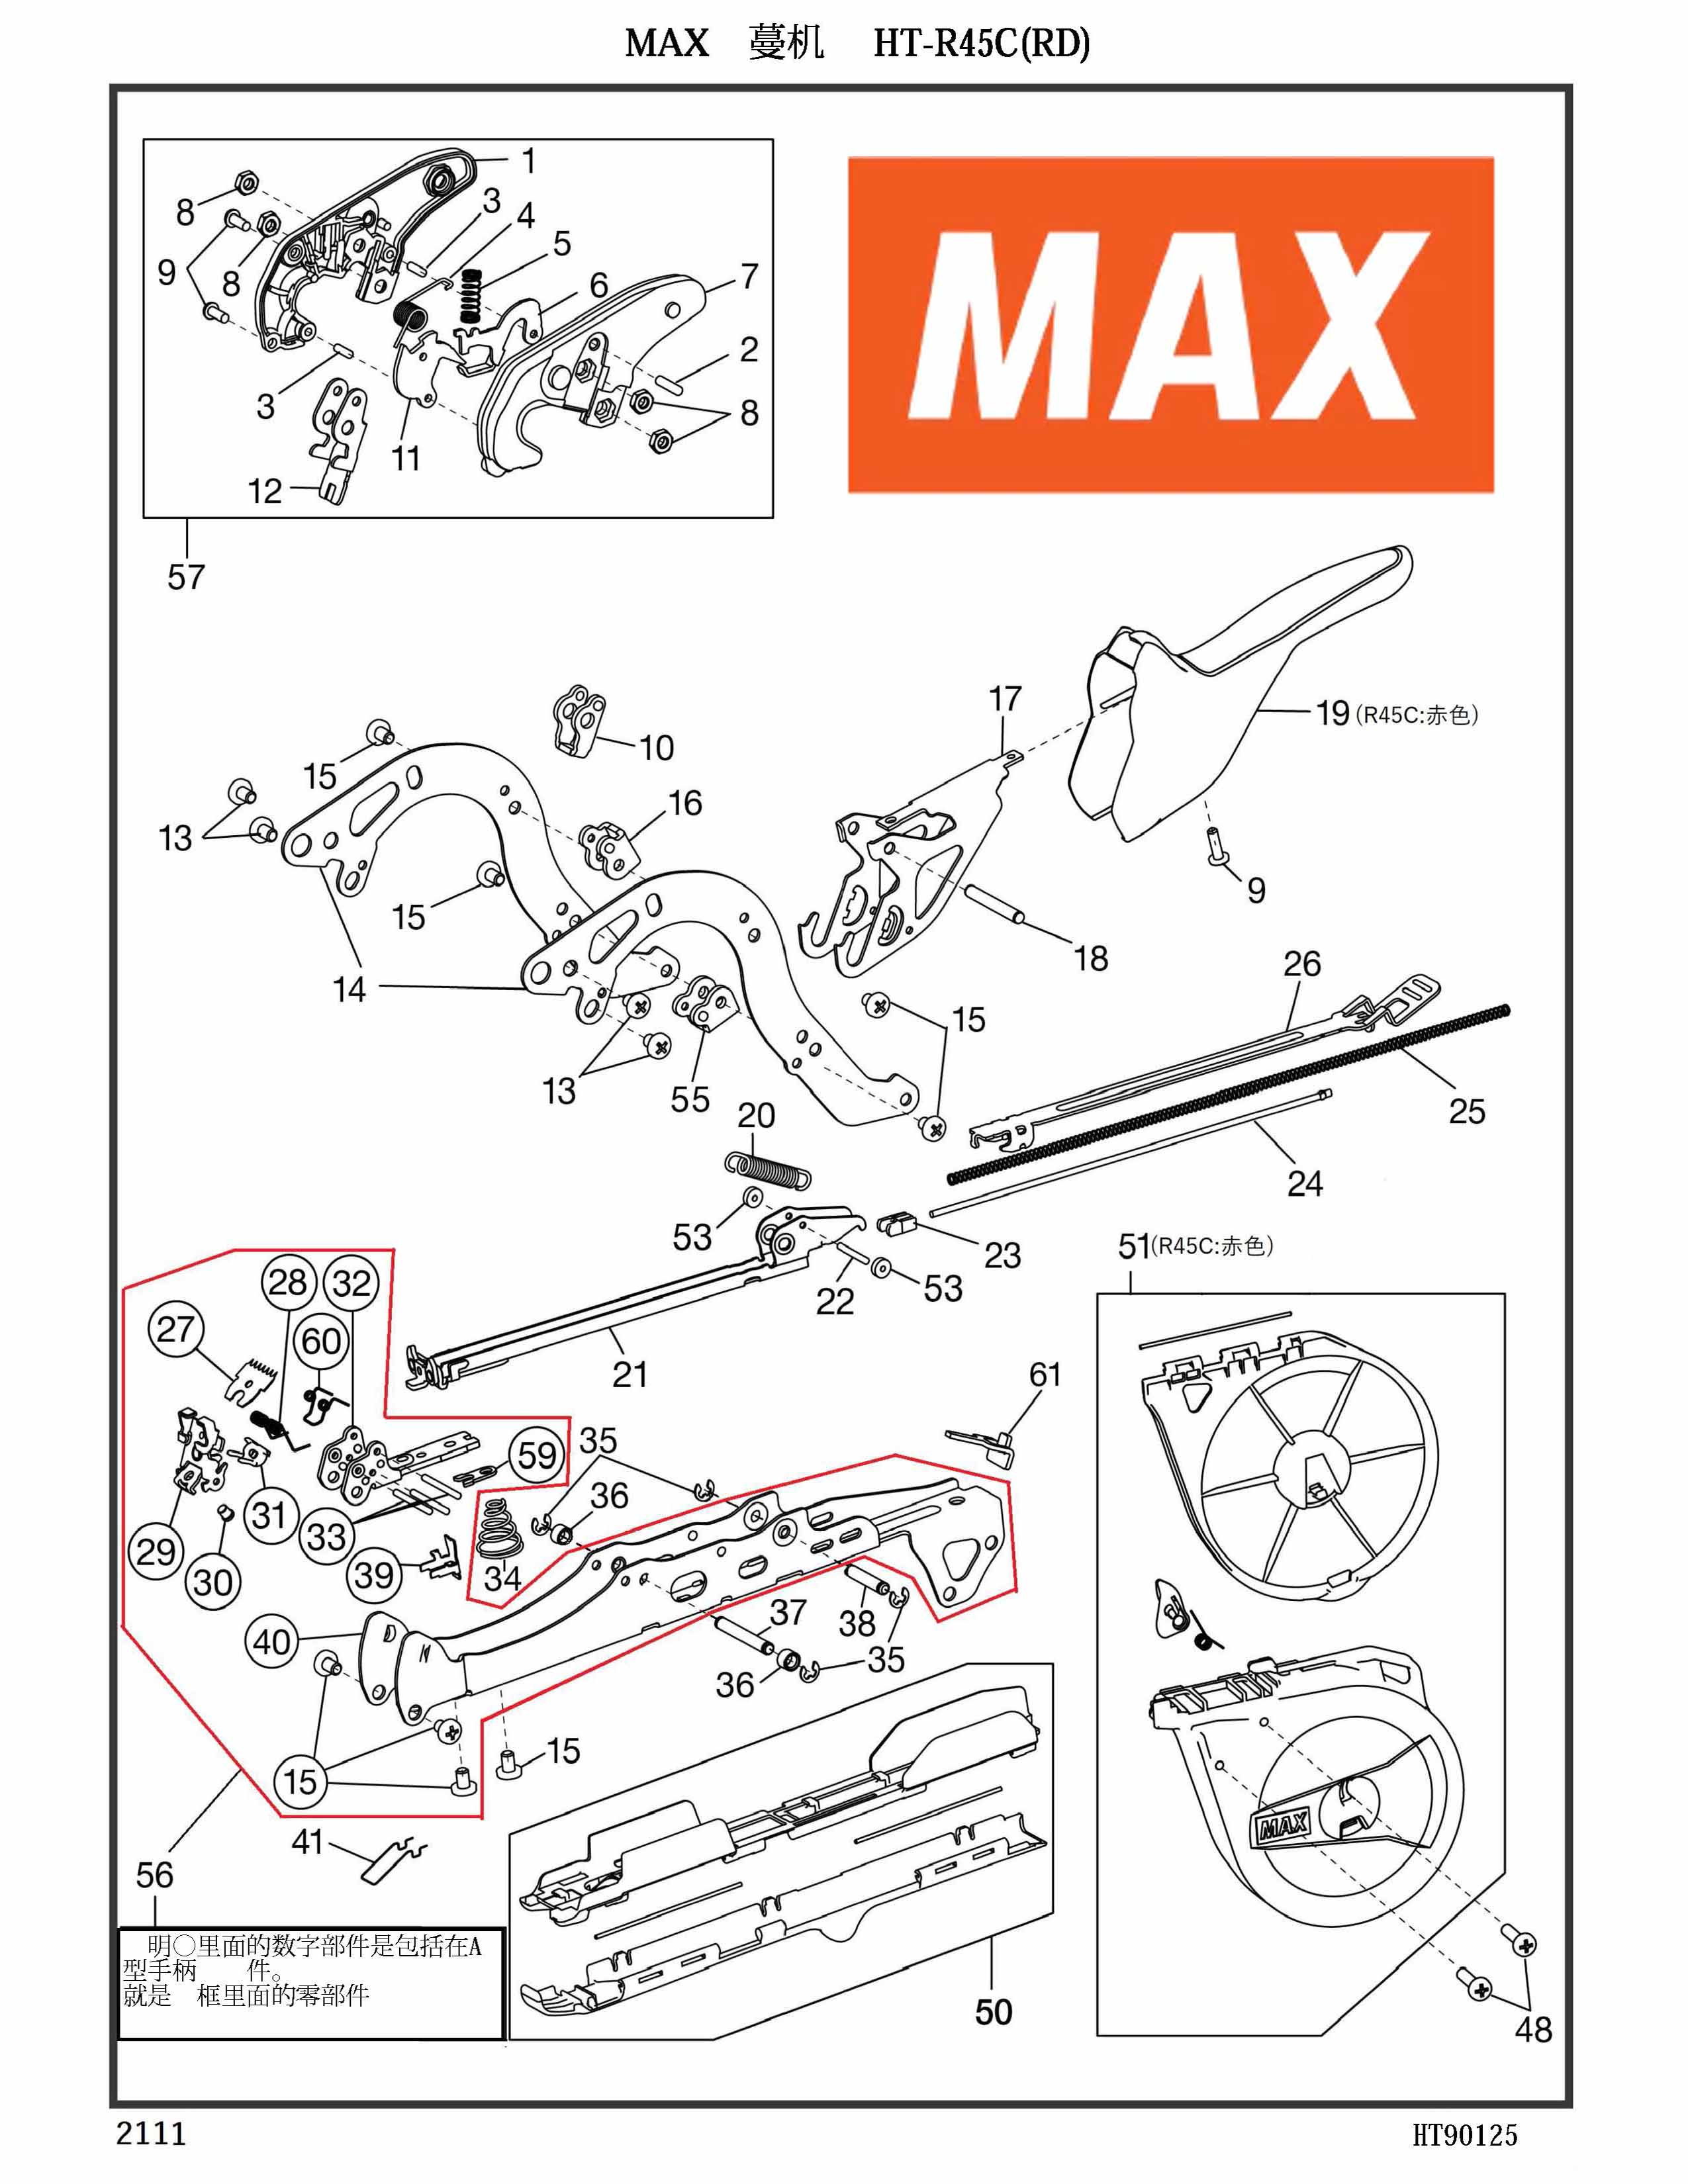 MAX Tapener Part HT11815 PUSHER (R45C) Fits MAX HT-R45L(O) R45C(RD) #23